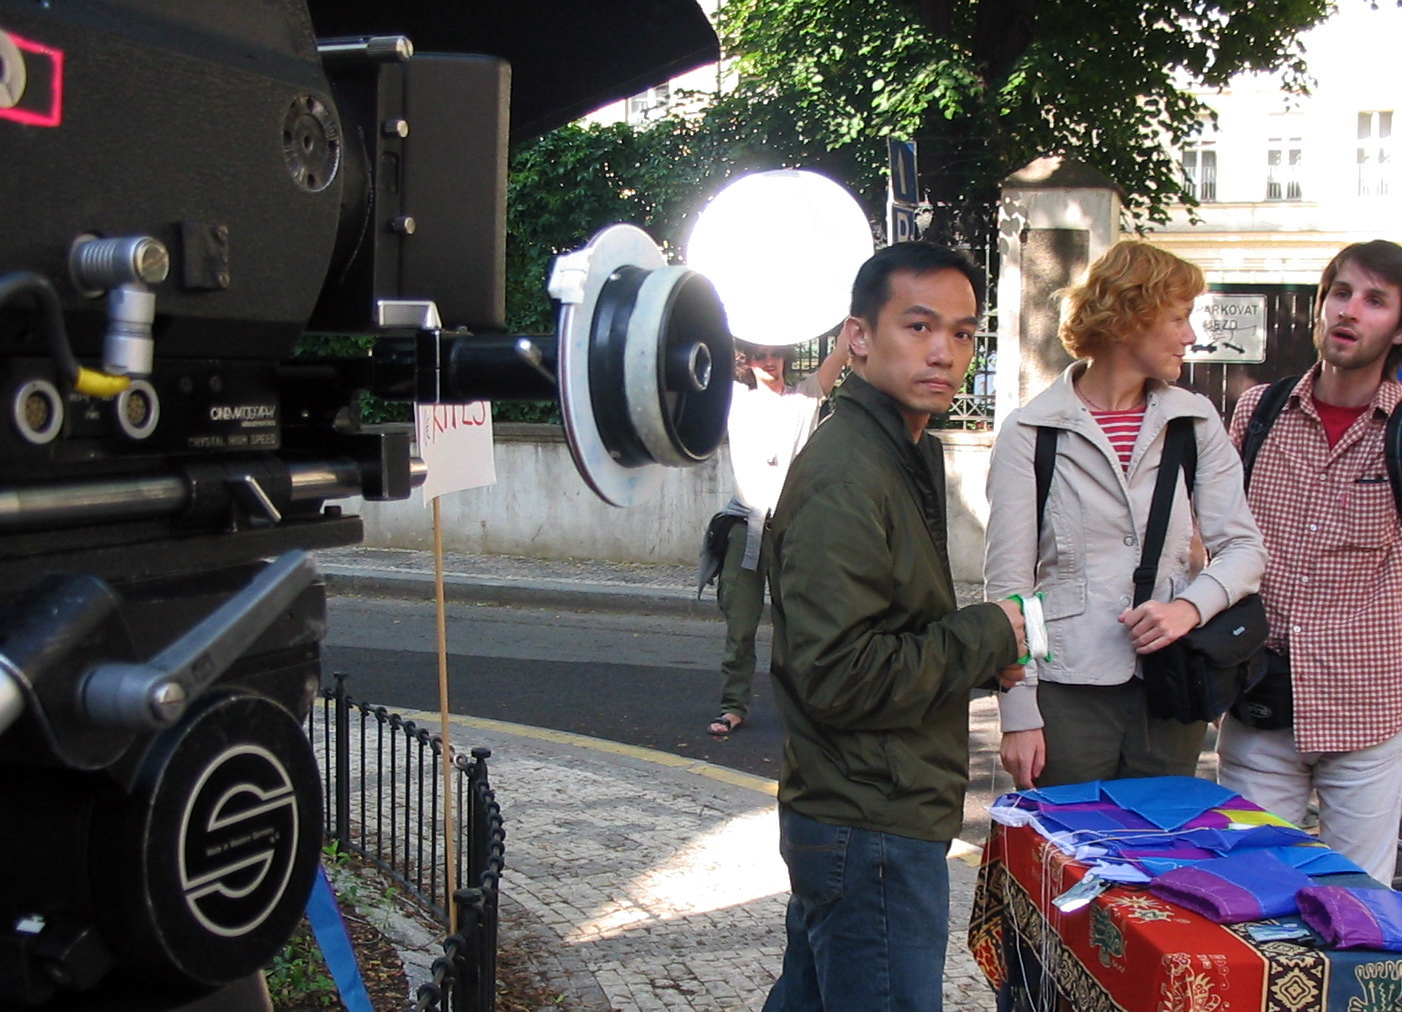 Filming in Prague